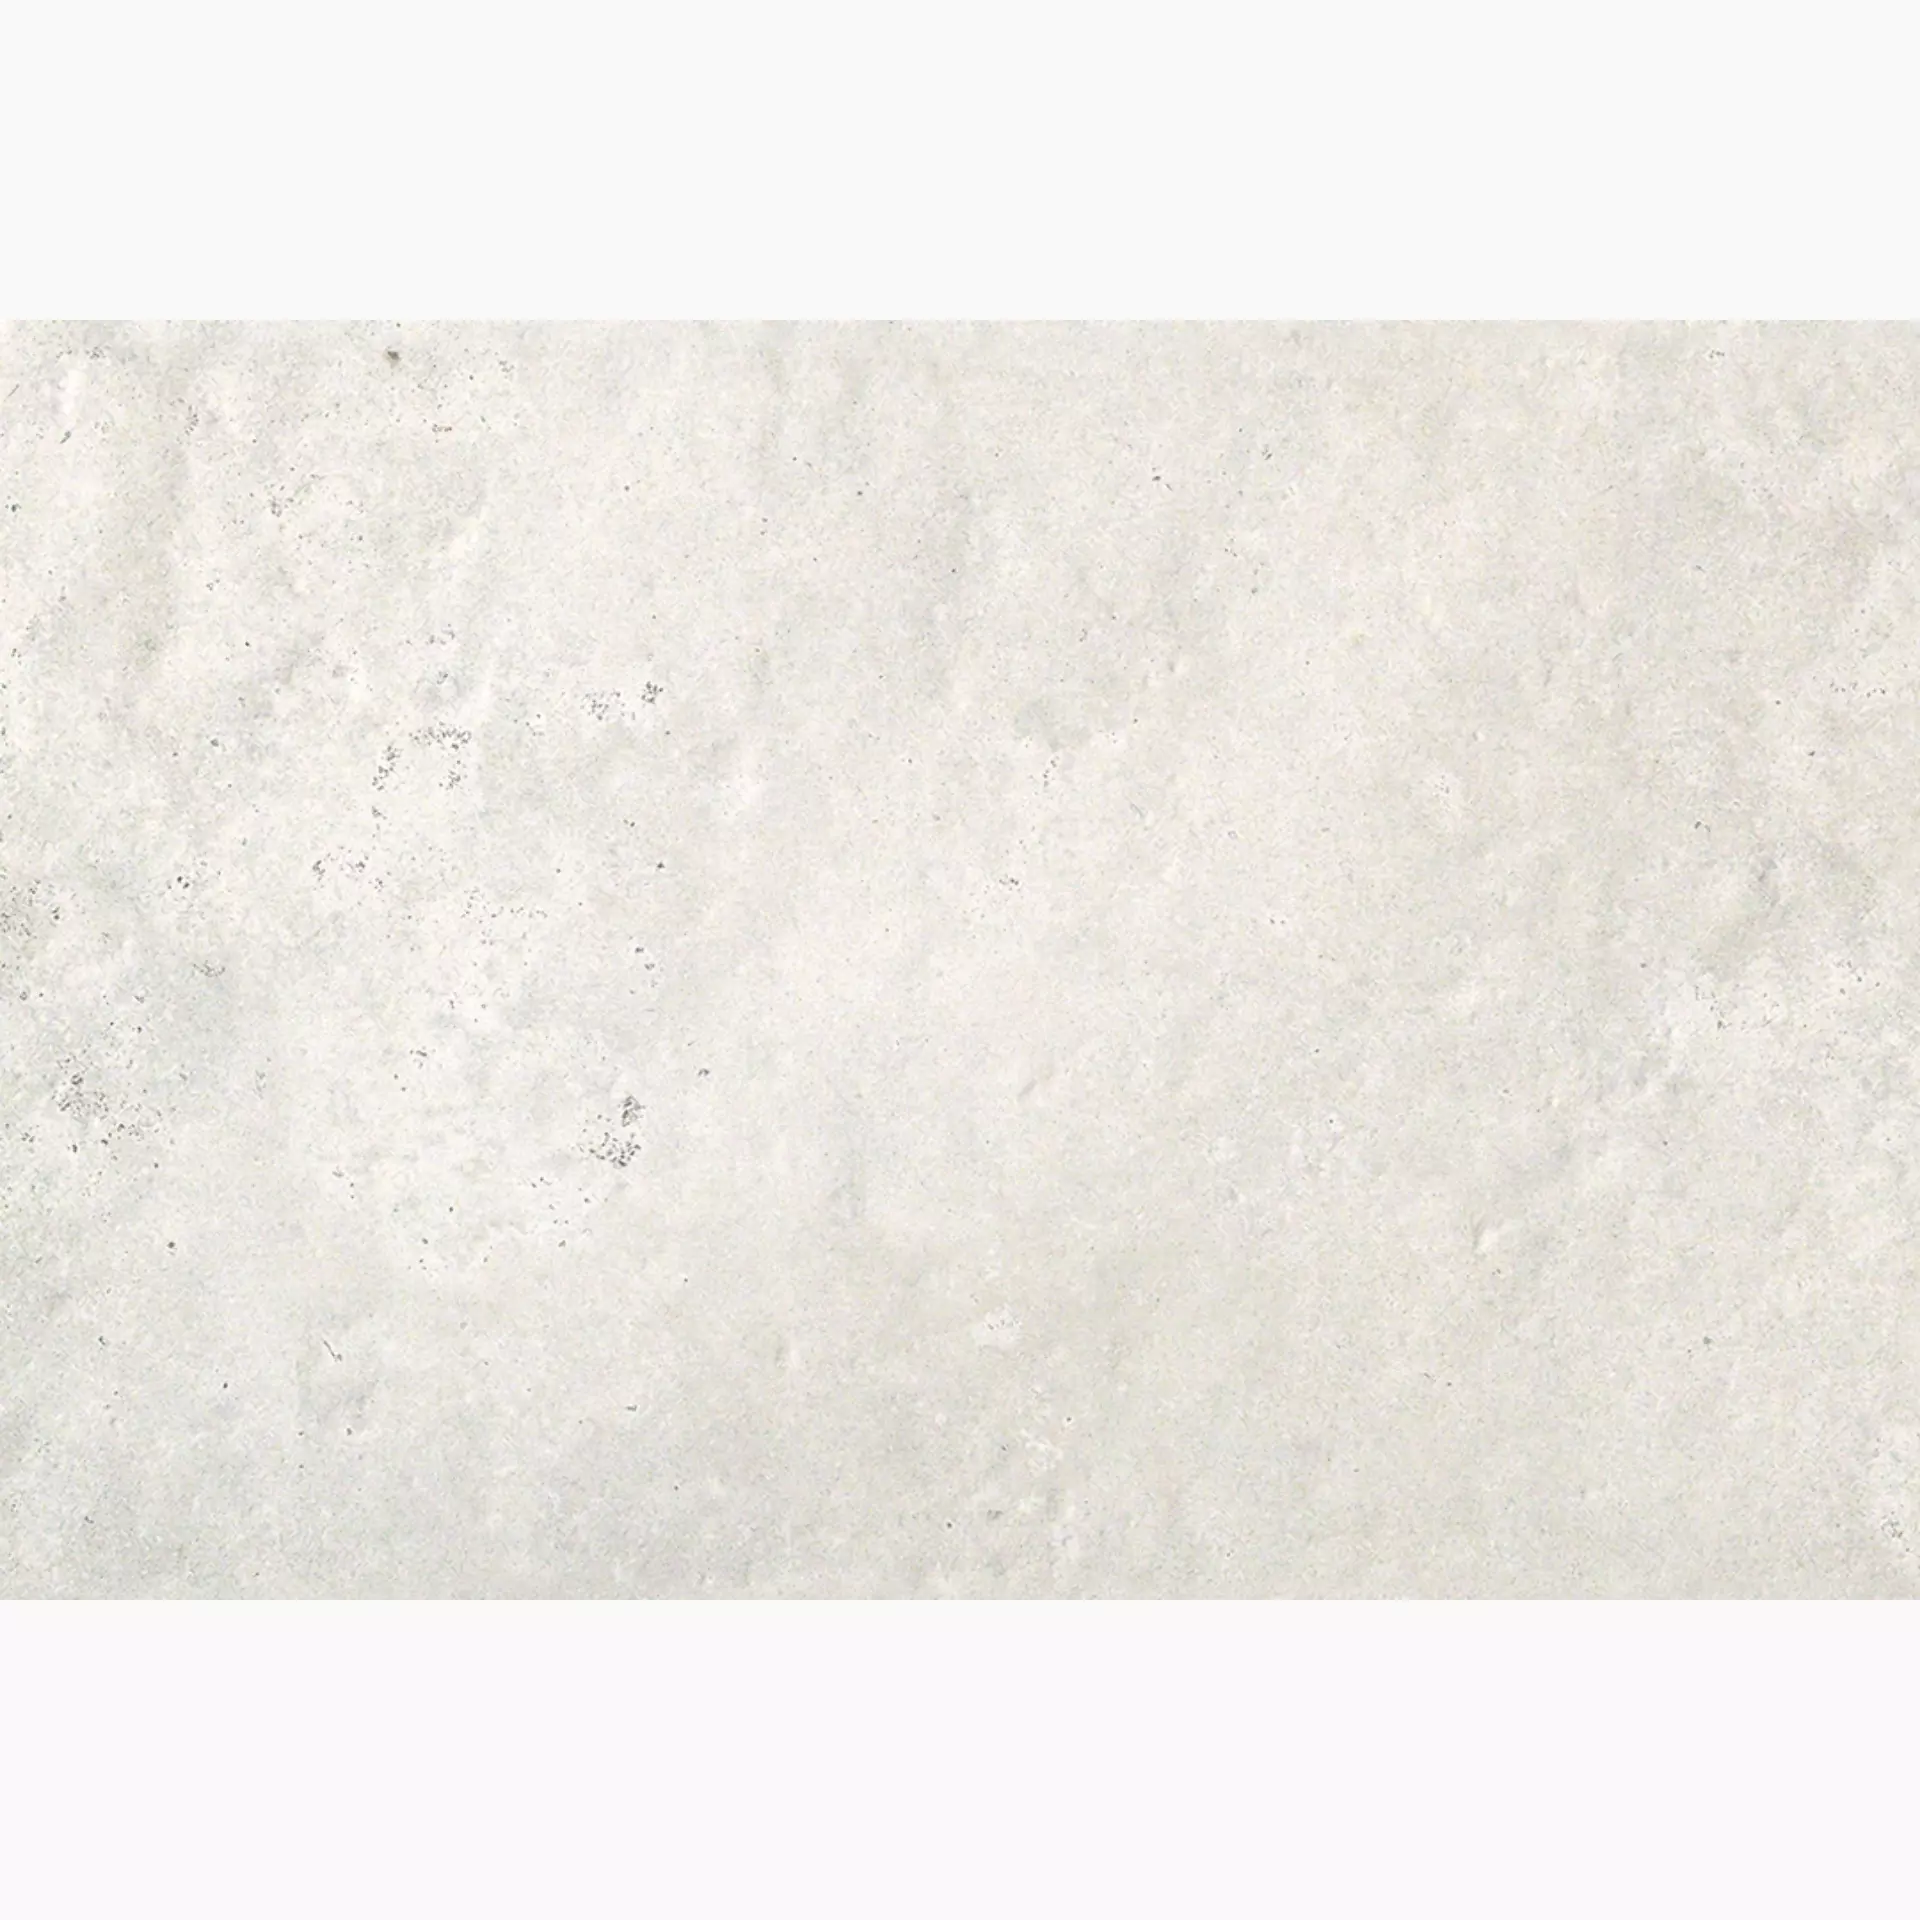 Sichenia Chambord Bianco Naturale CHBR691 60x90cm rectified 10mm